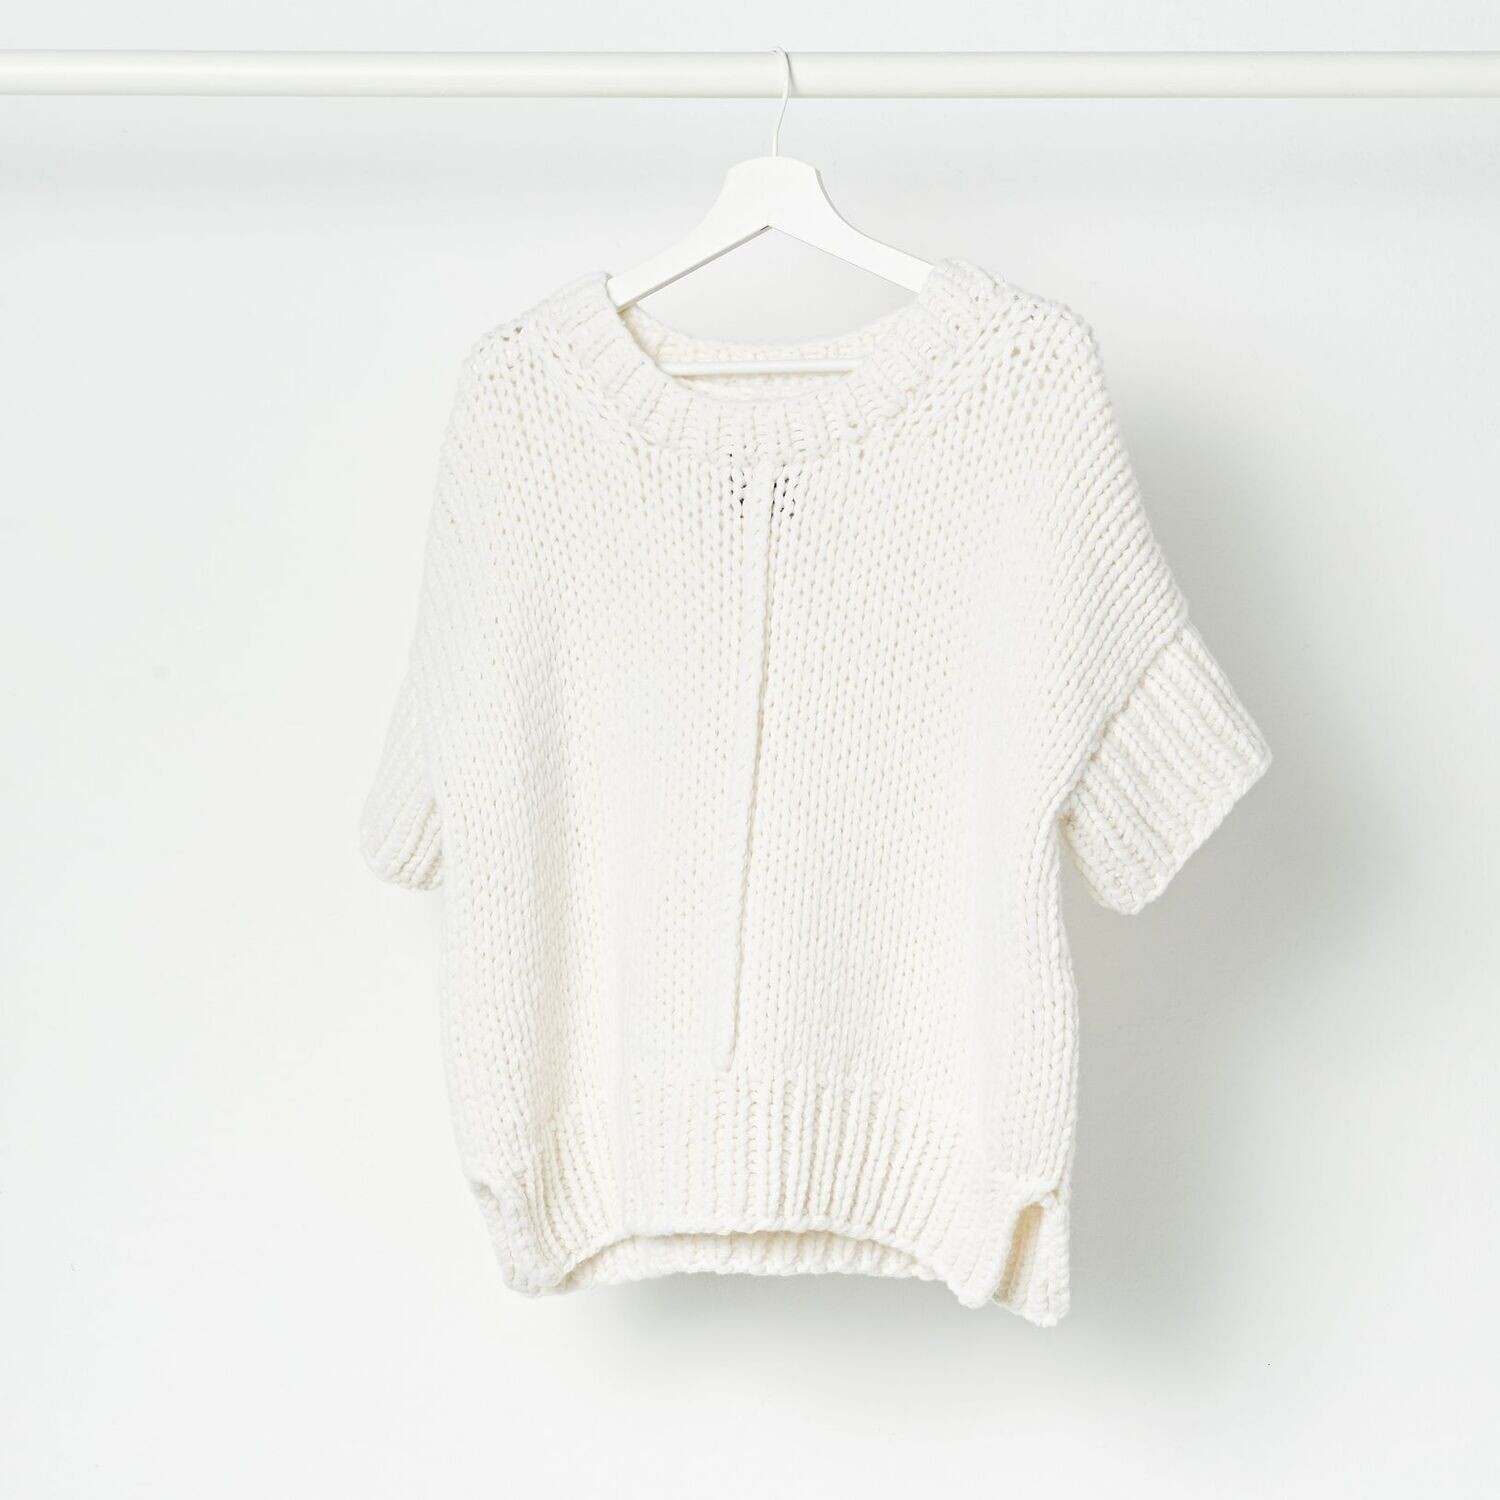 Handstrick-Sweater MIA KURZARM, Farbe: weiß, Größe: M/L